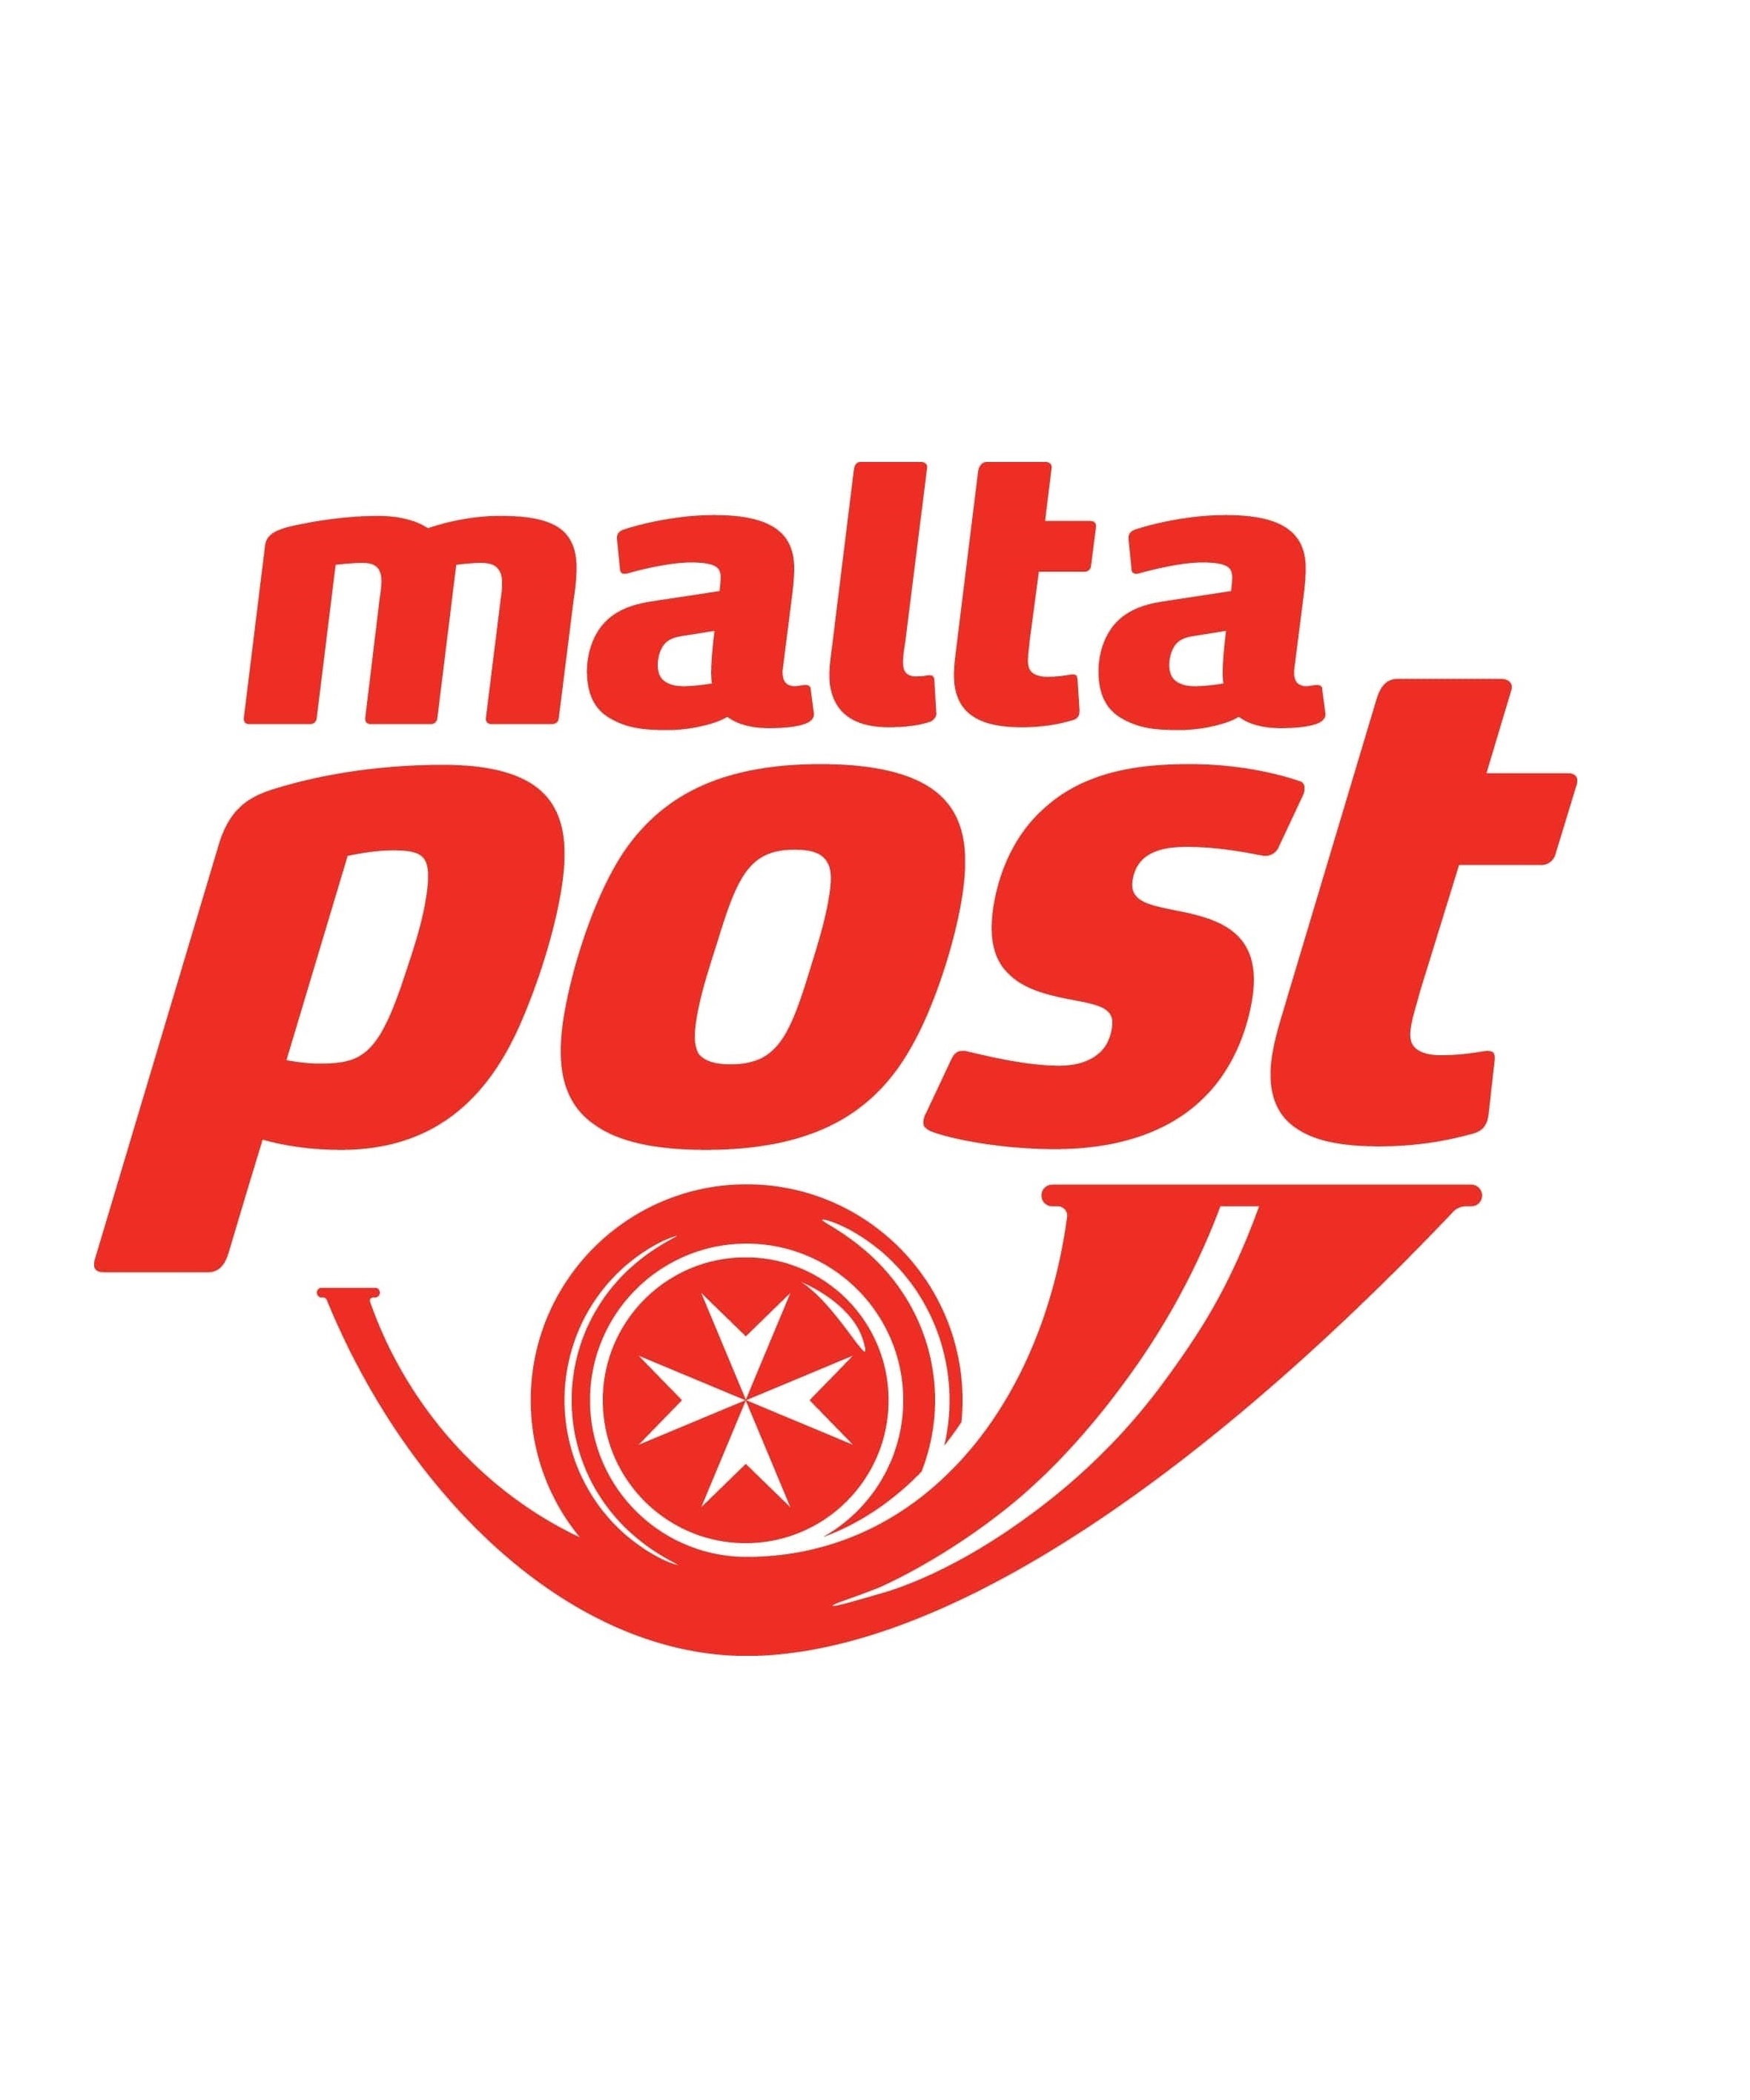 Permanent Closure of Sub Post Office in Marsaxlokk